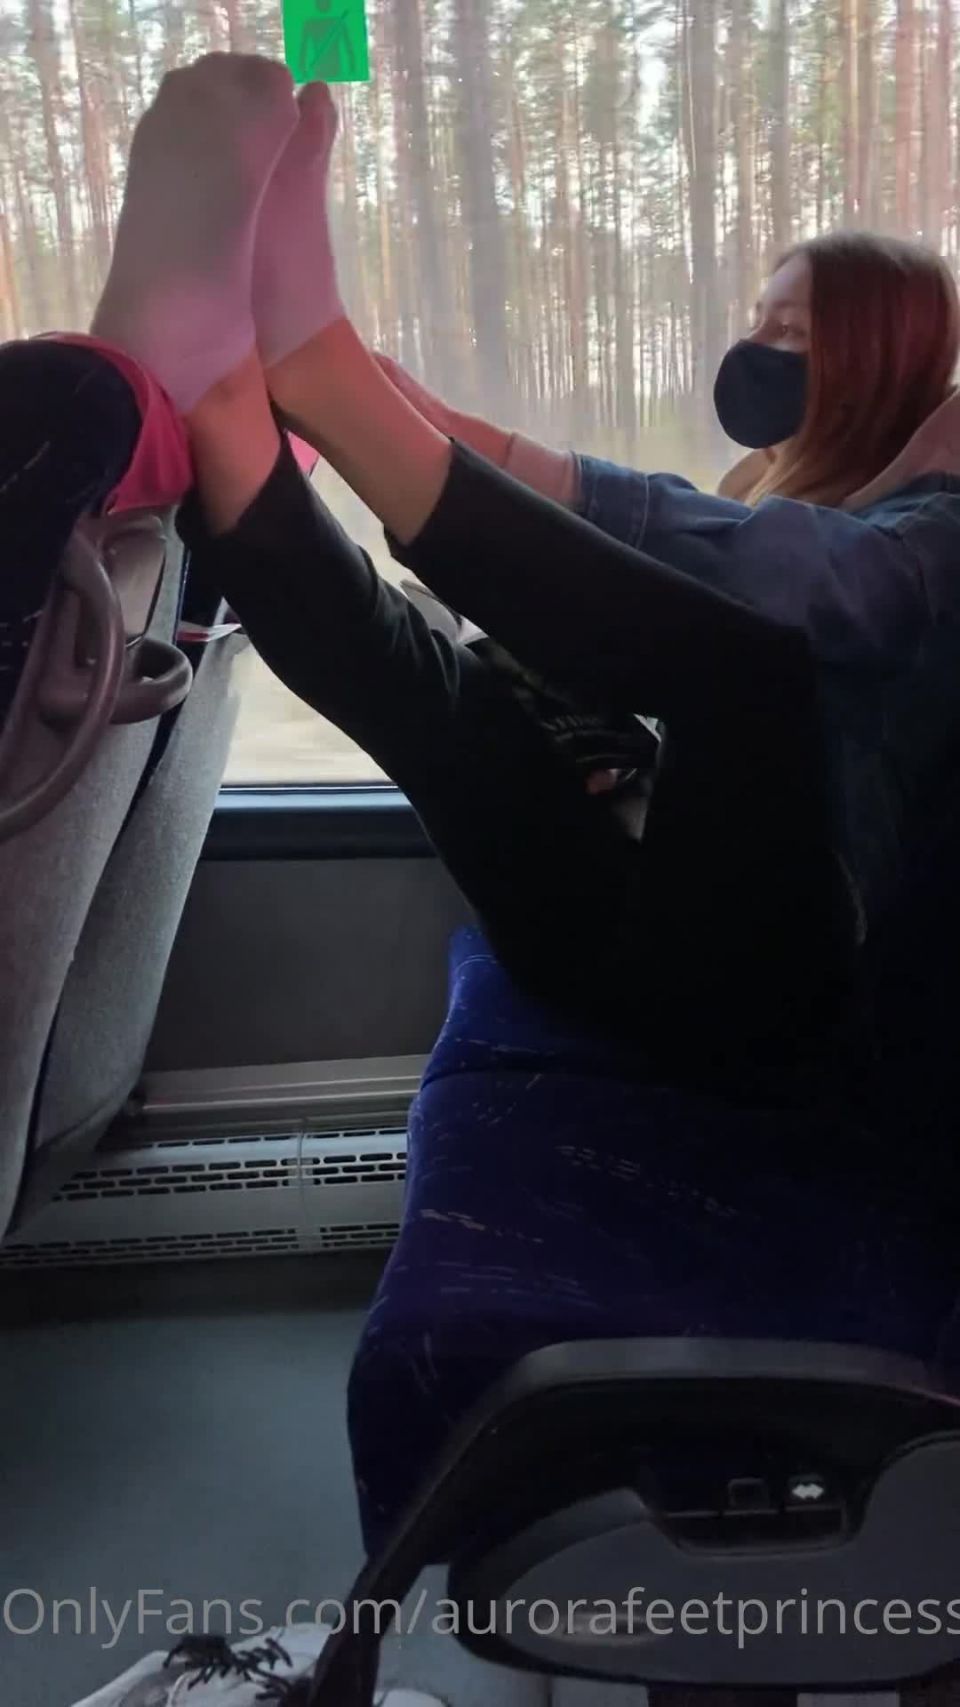 Aven - aven turinex () Aventurinex - taking my socks off and exposing my sweaty feet while on bus 20-04-2021